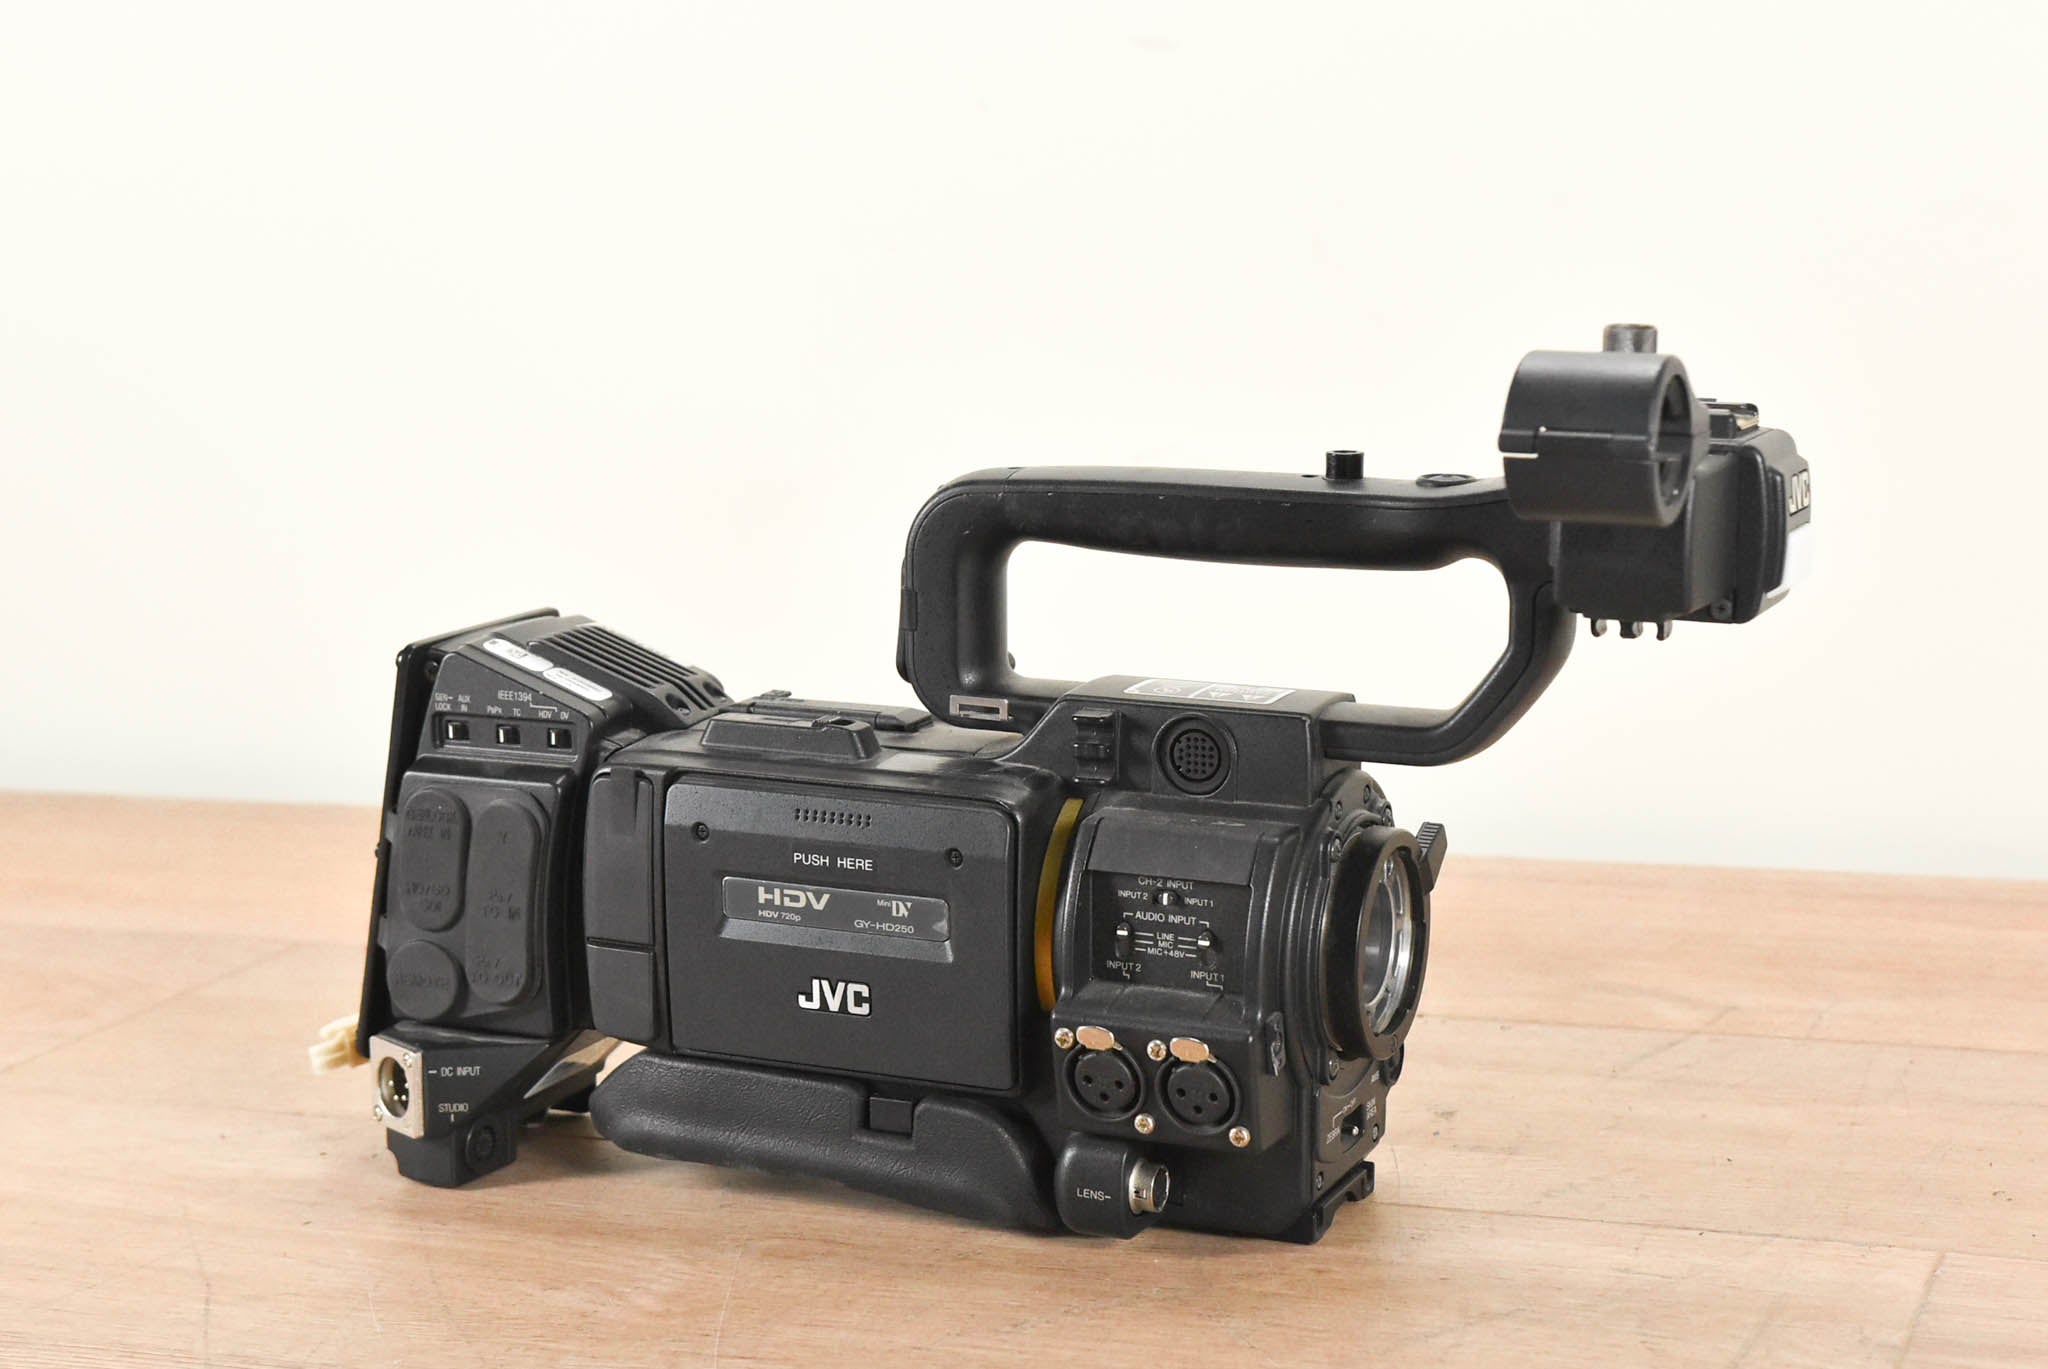 JVC GY-HD250U 1/3" 3-CCD Professional HDV Camcorder